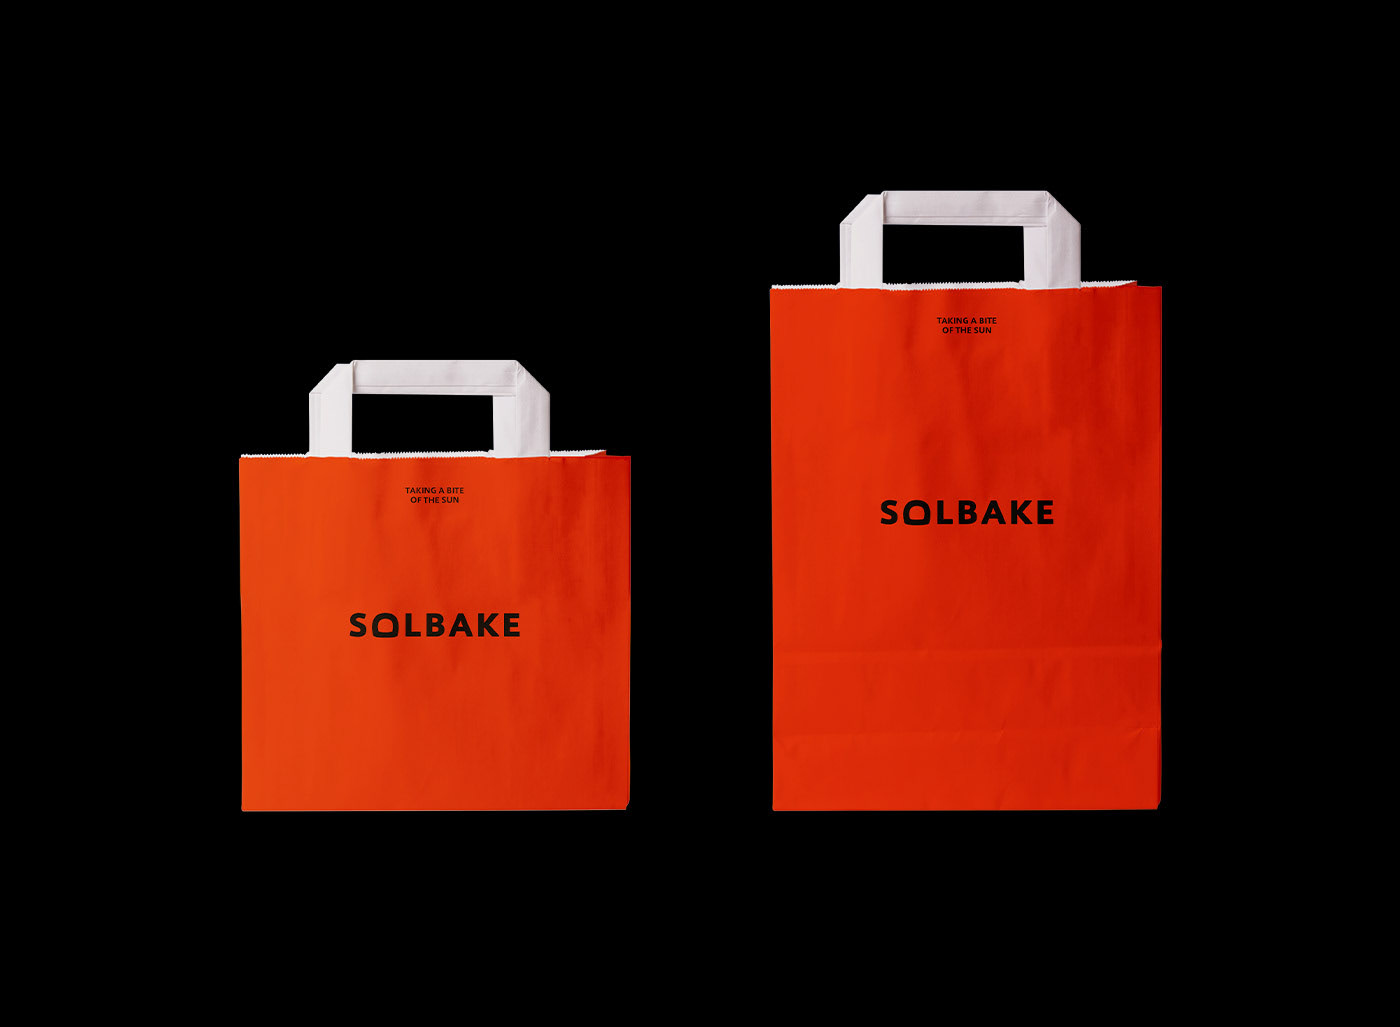 SOLBAKE面包房品牌形象设计